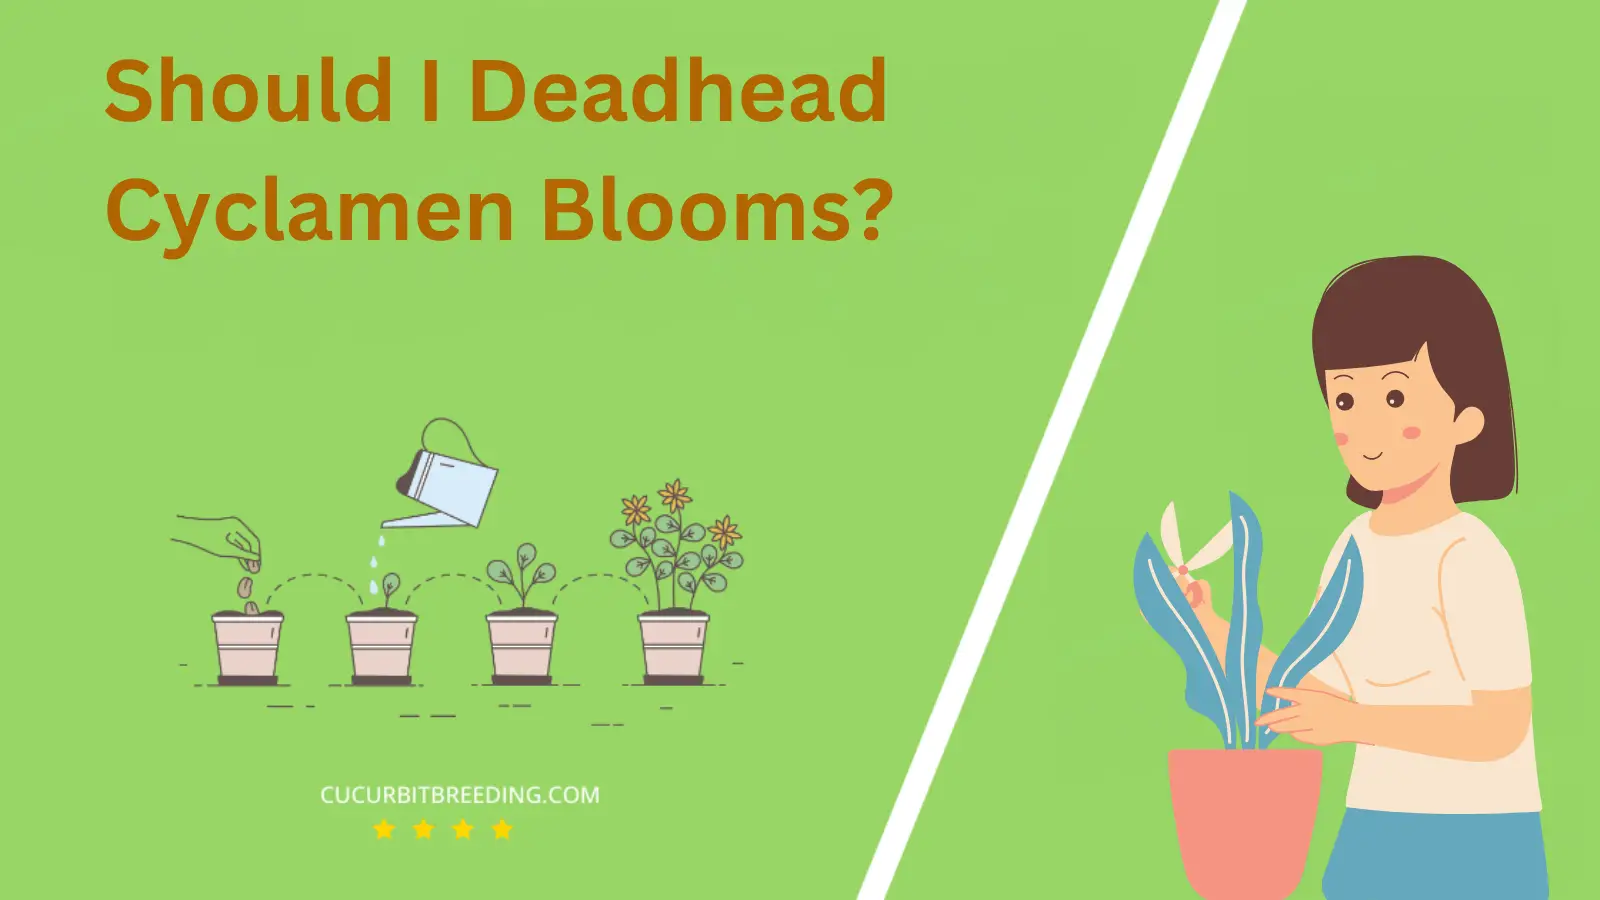 Should I Deadhead Cyclamen Blooms?